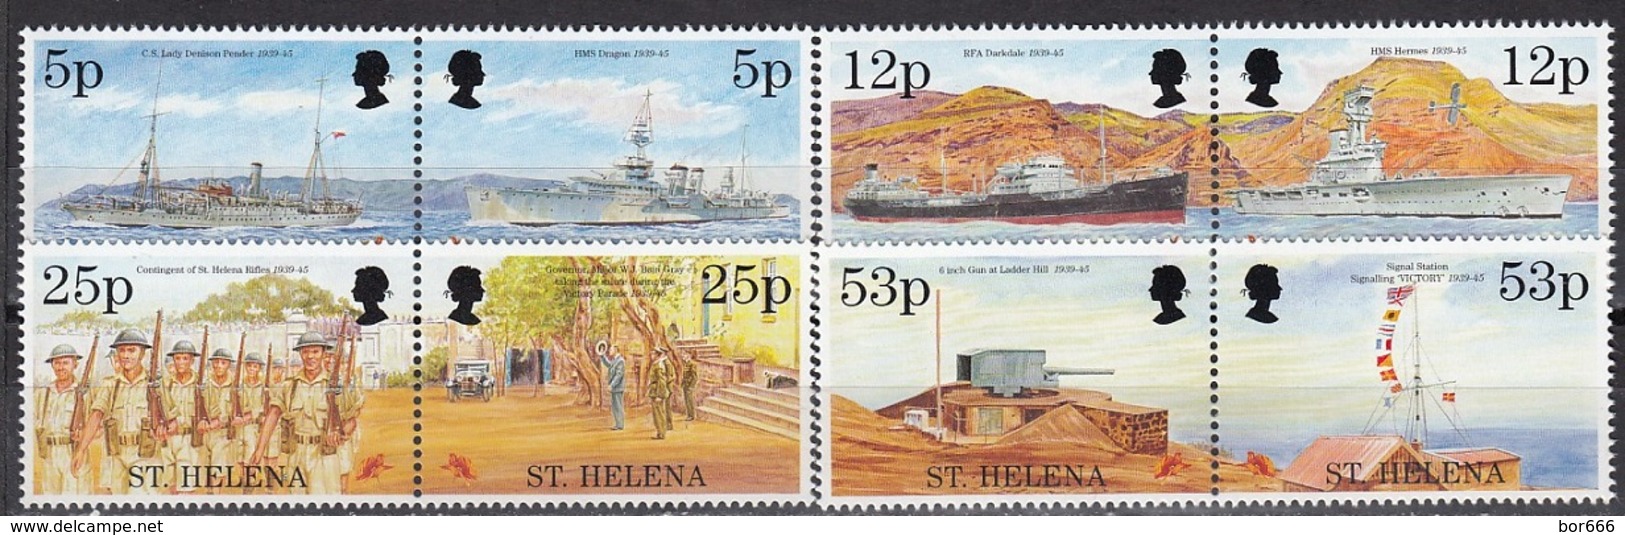 St Helena - END OF WWII / SHIPS / CAR / ARMY 1995 MNH - Sainte-Hélène